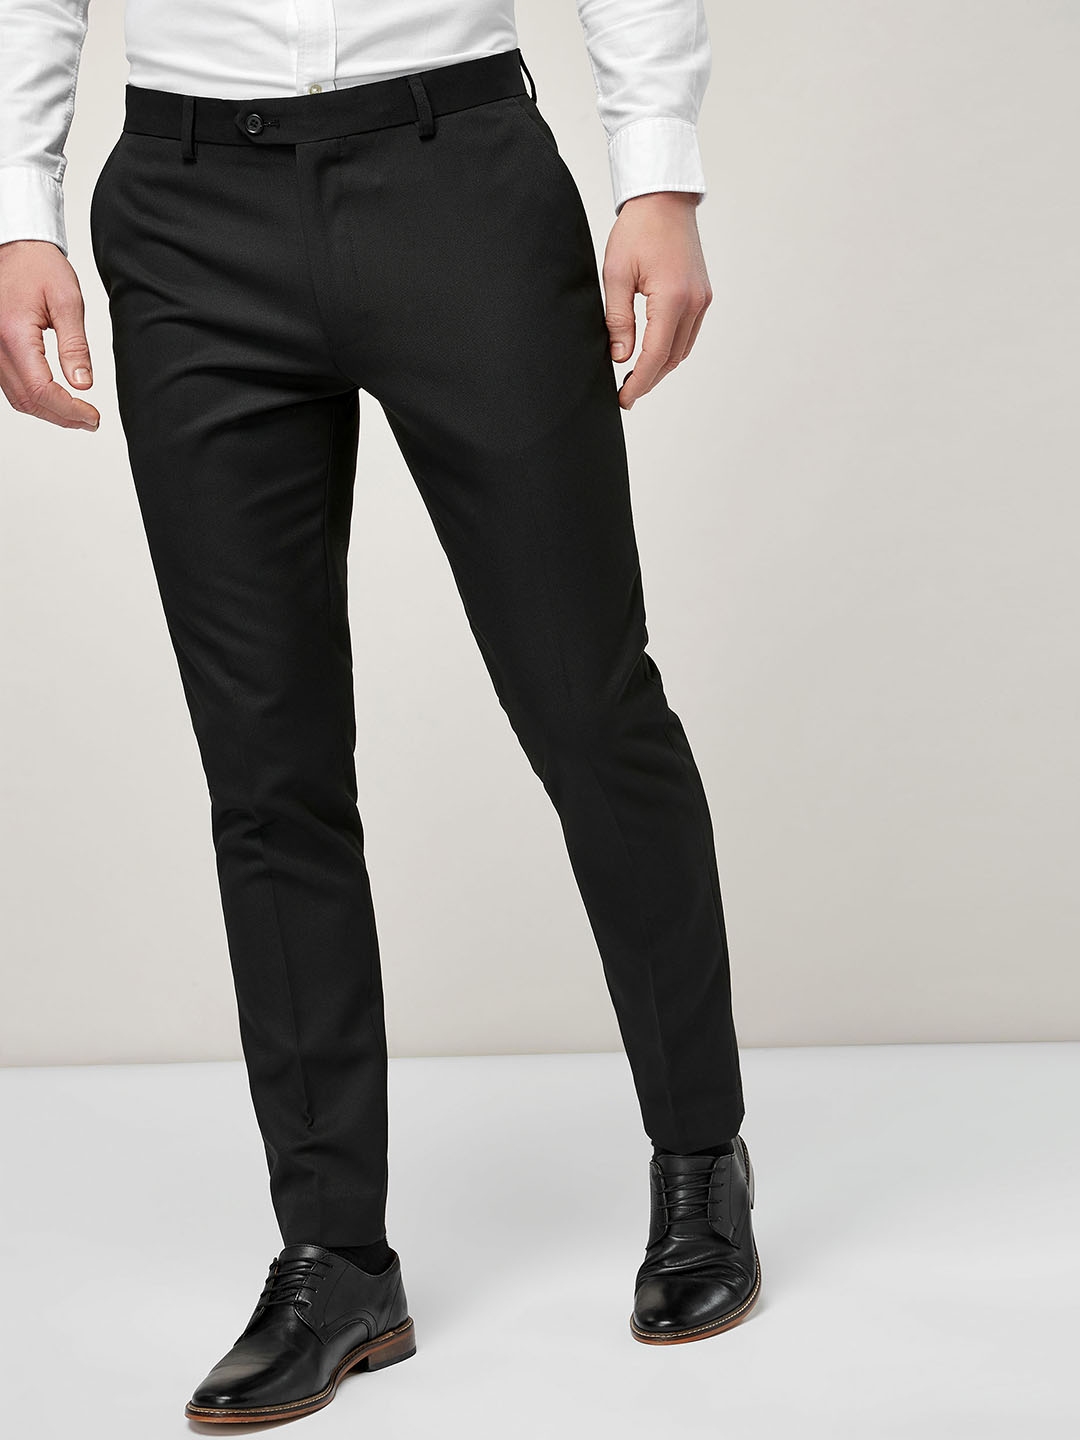 Next Look Slim Fit Men Brown Trousers  Buy Next Look Slim Fit Men Brown  Trousers Online at Best Prices in India  Flipkartcom